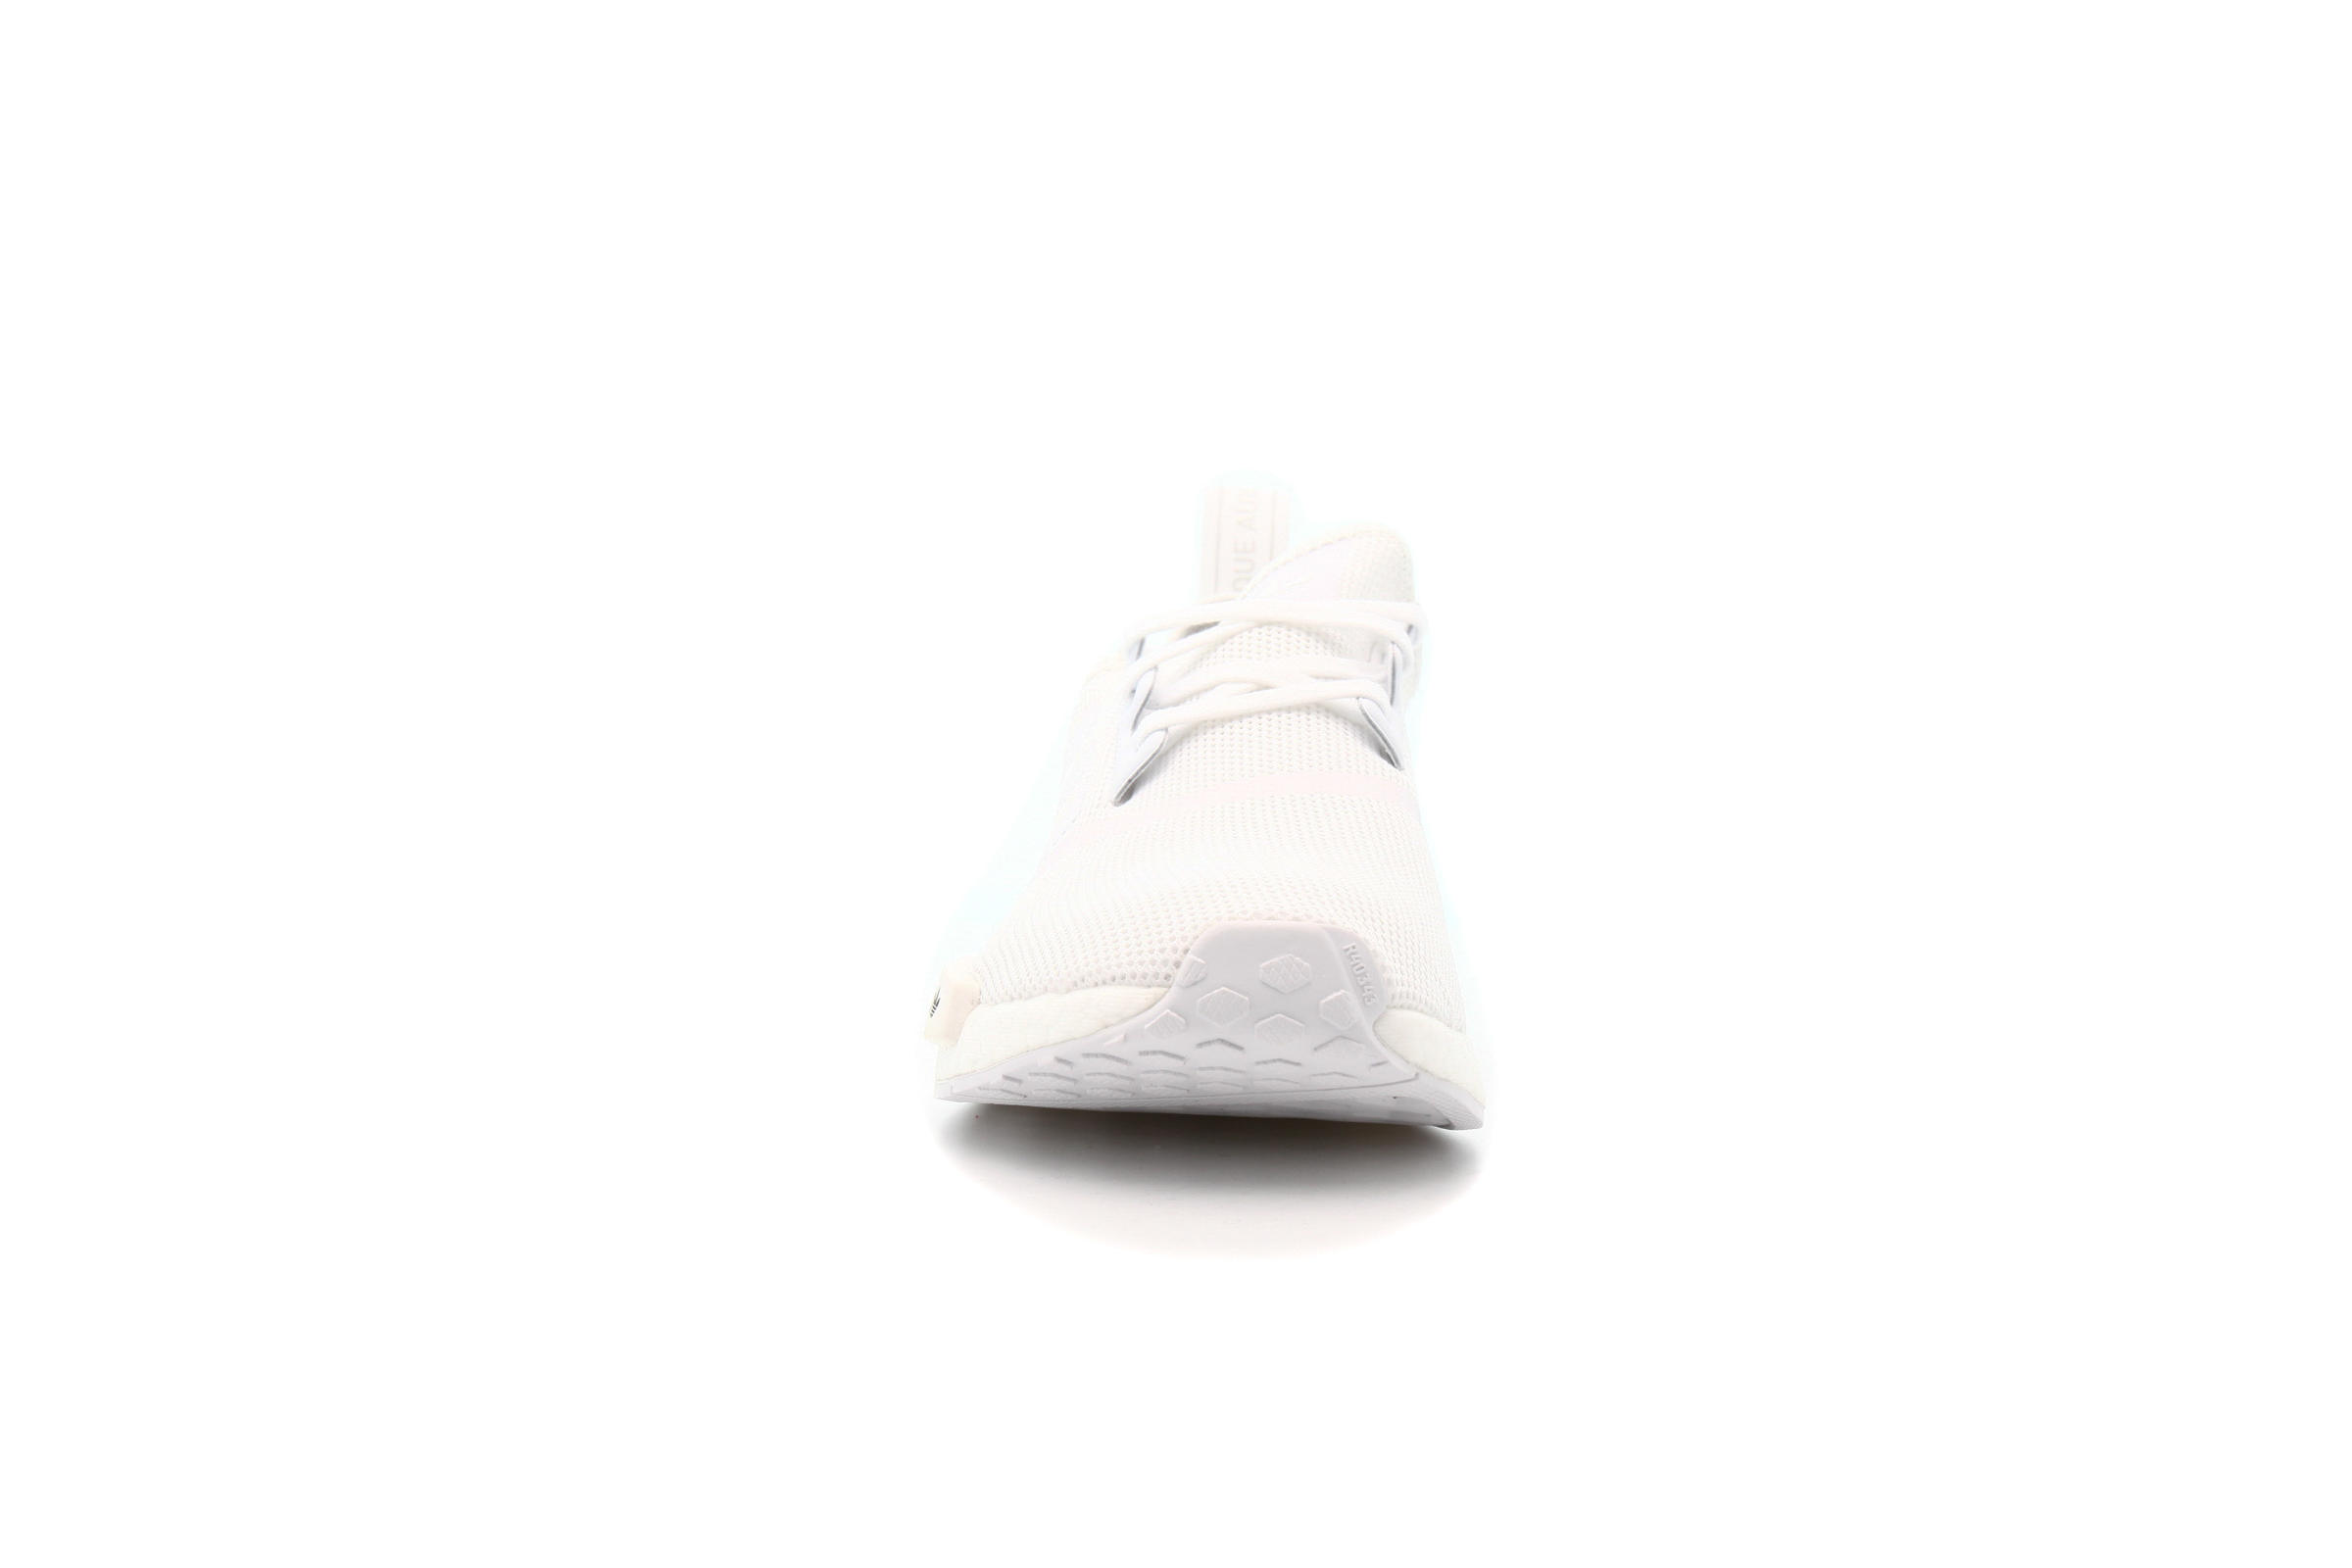 adidas Originals NMD R1 J "FOOTWEAR WHITE"